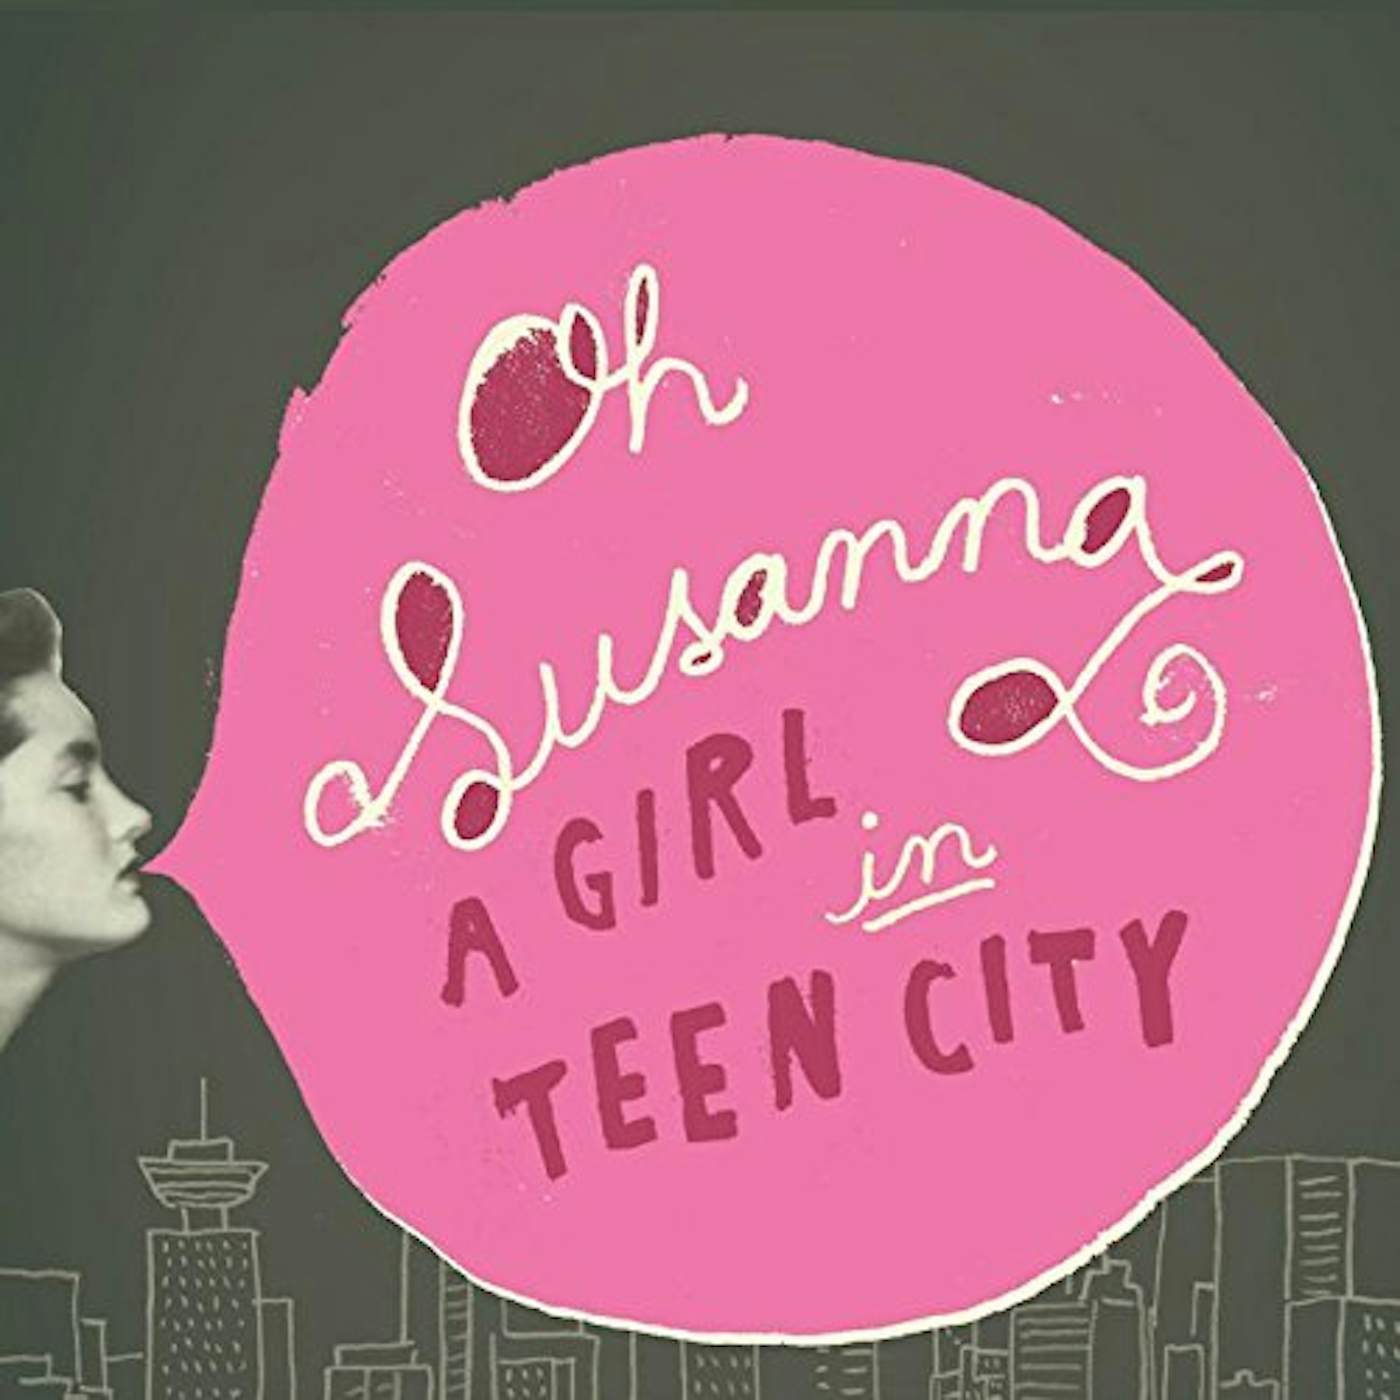 OH SUSANNA GIRL IN TEEN CITY CD